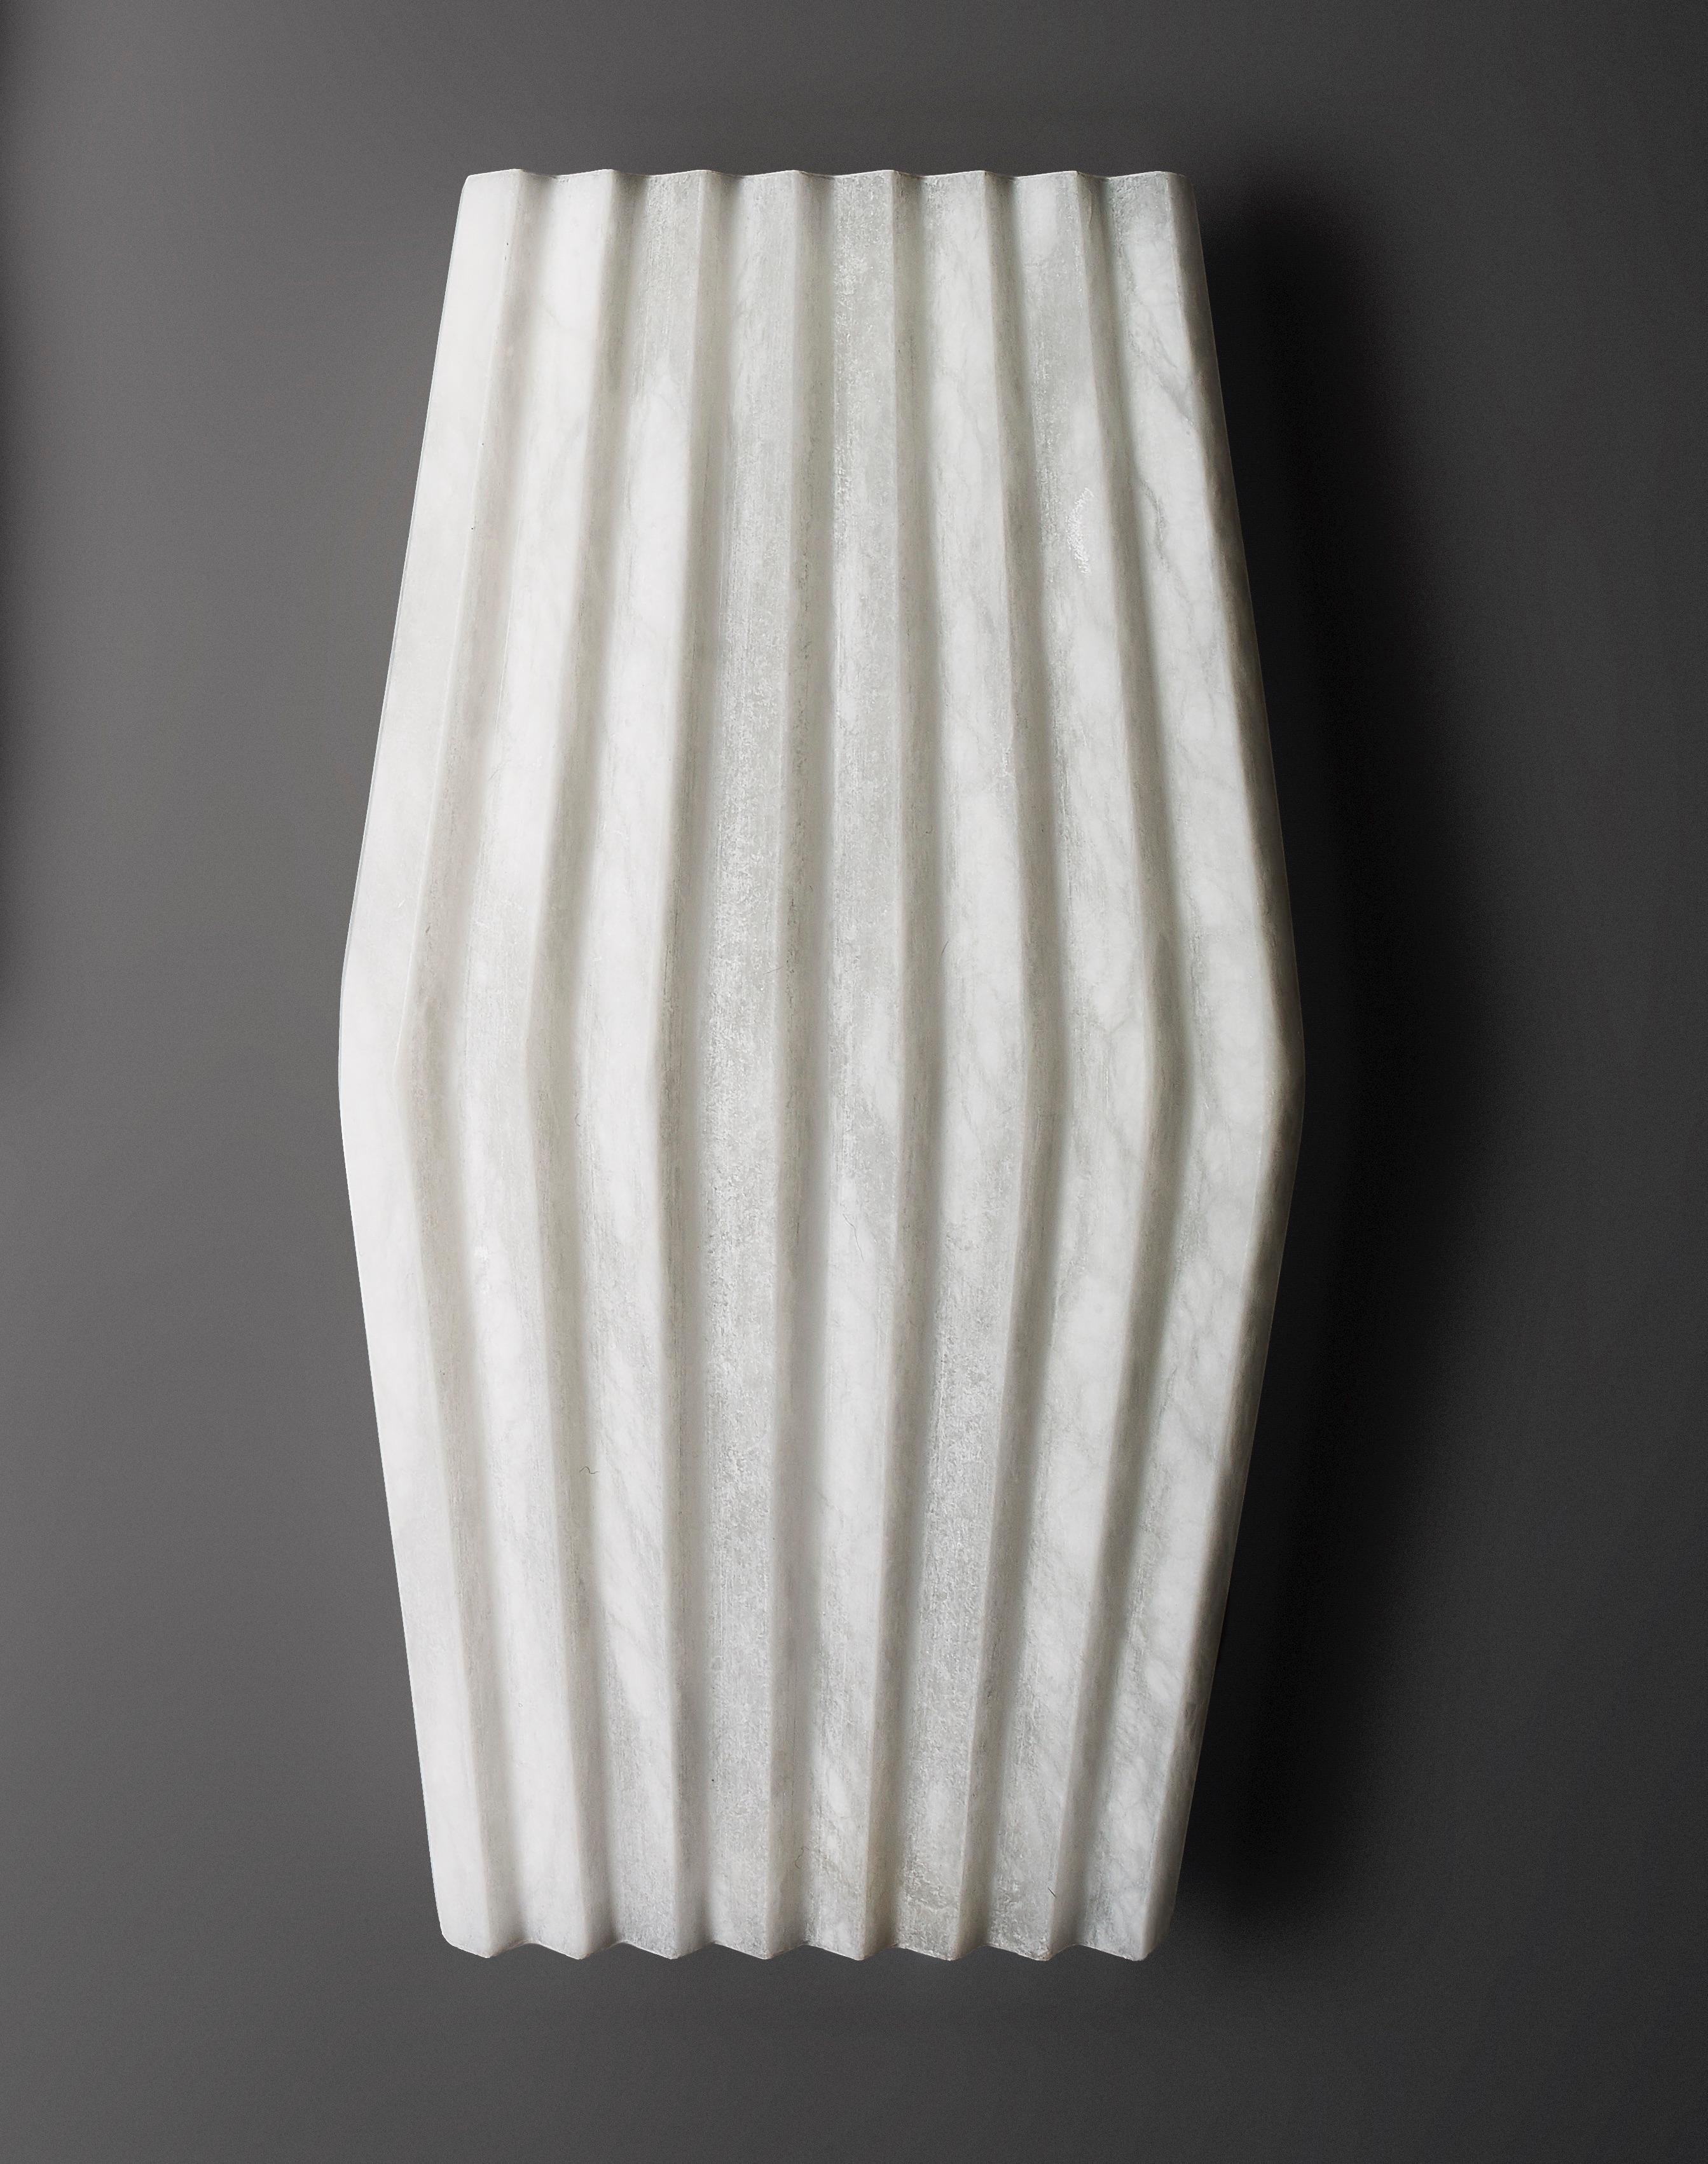 Organic Modern Bespoke Minimalist Italian Neoclassical White Alabaster Geometric Modern Sconce